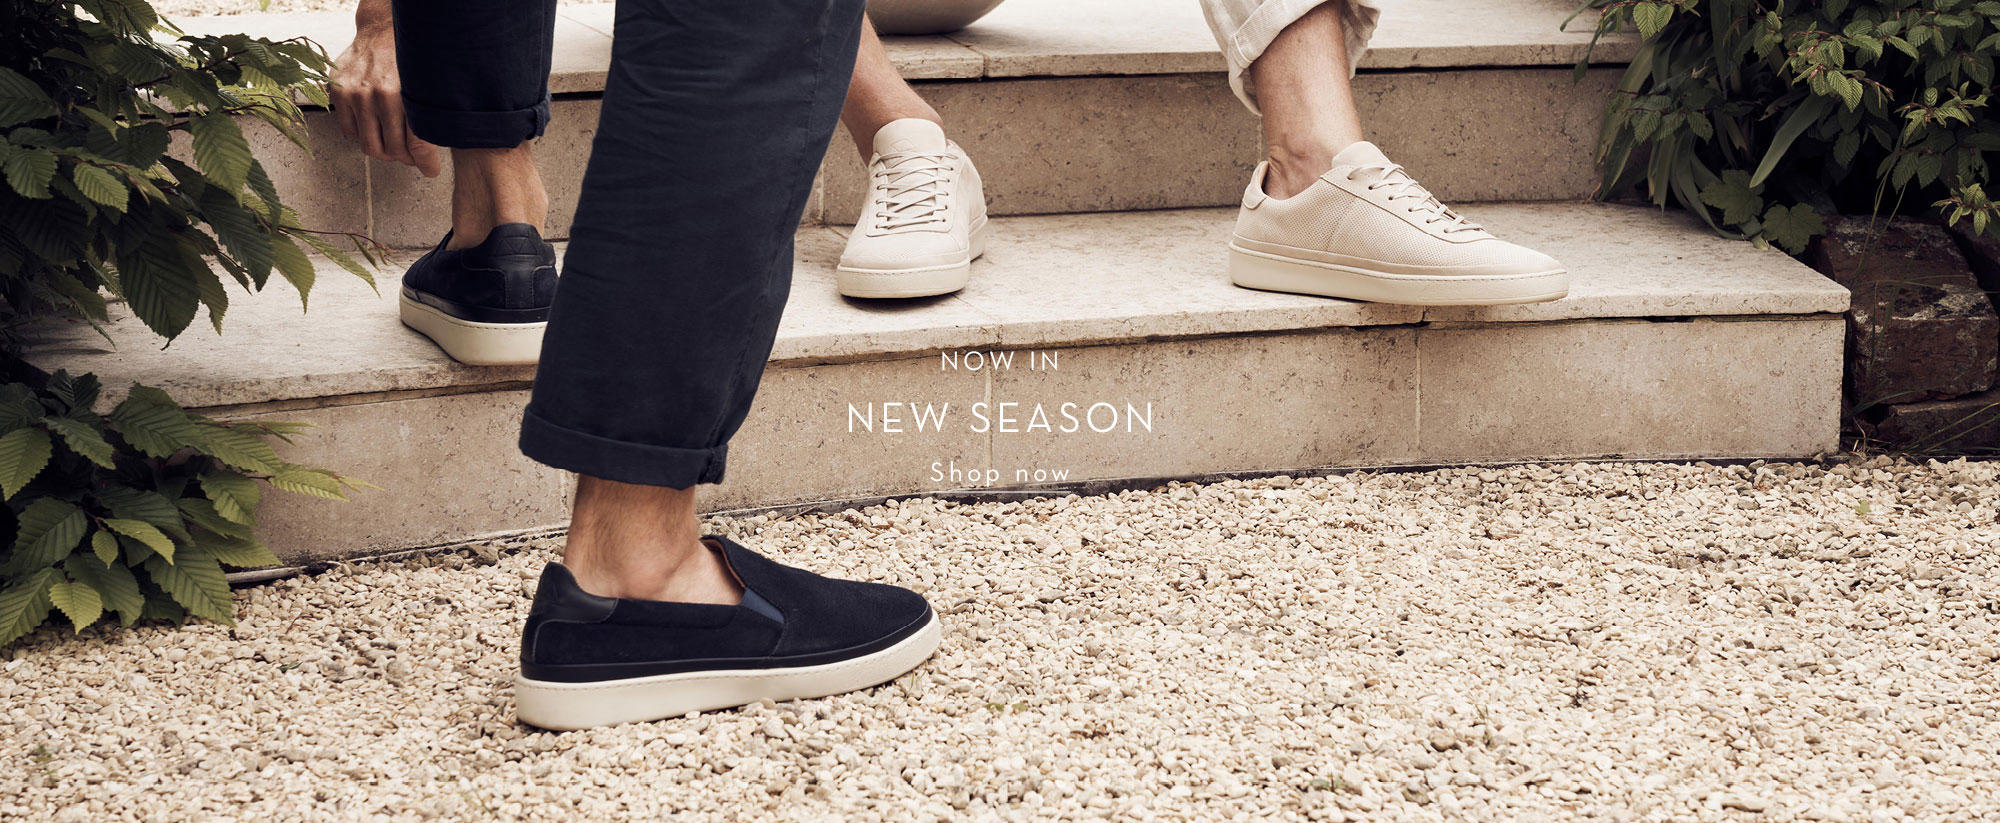 MULO - New Season Sneakers - Shop Now